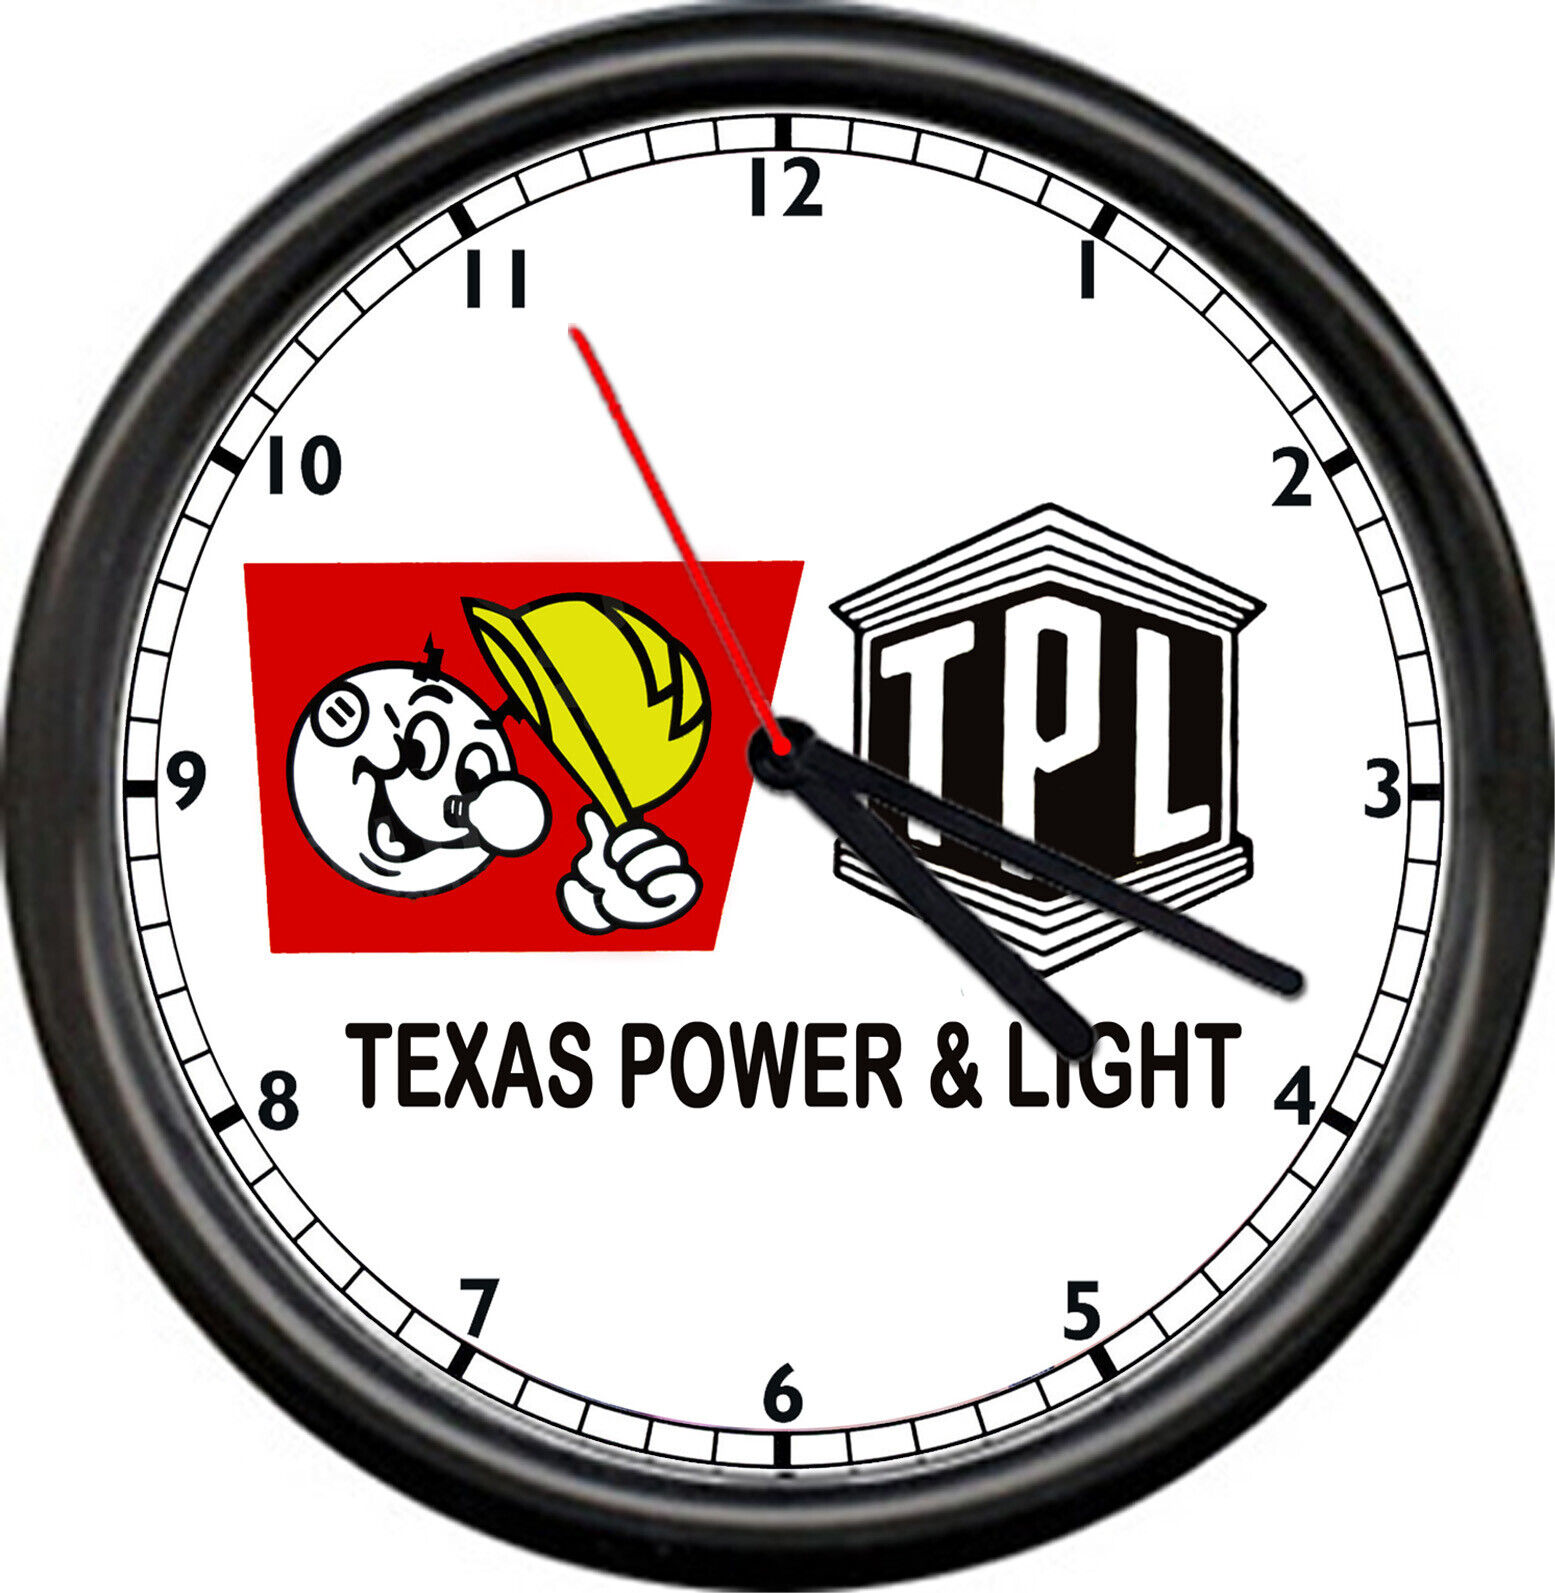 Reddy Kilowatt Texas Power & Light Electric Power Company Retro Sign Wall Clock